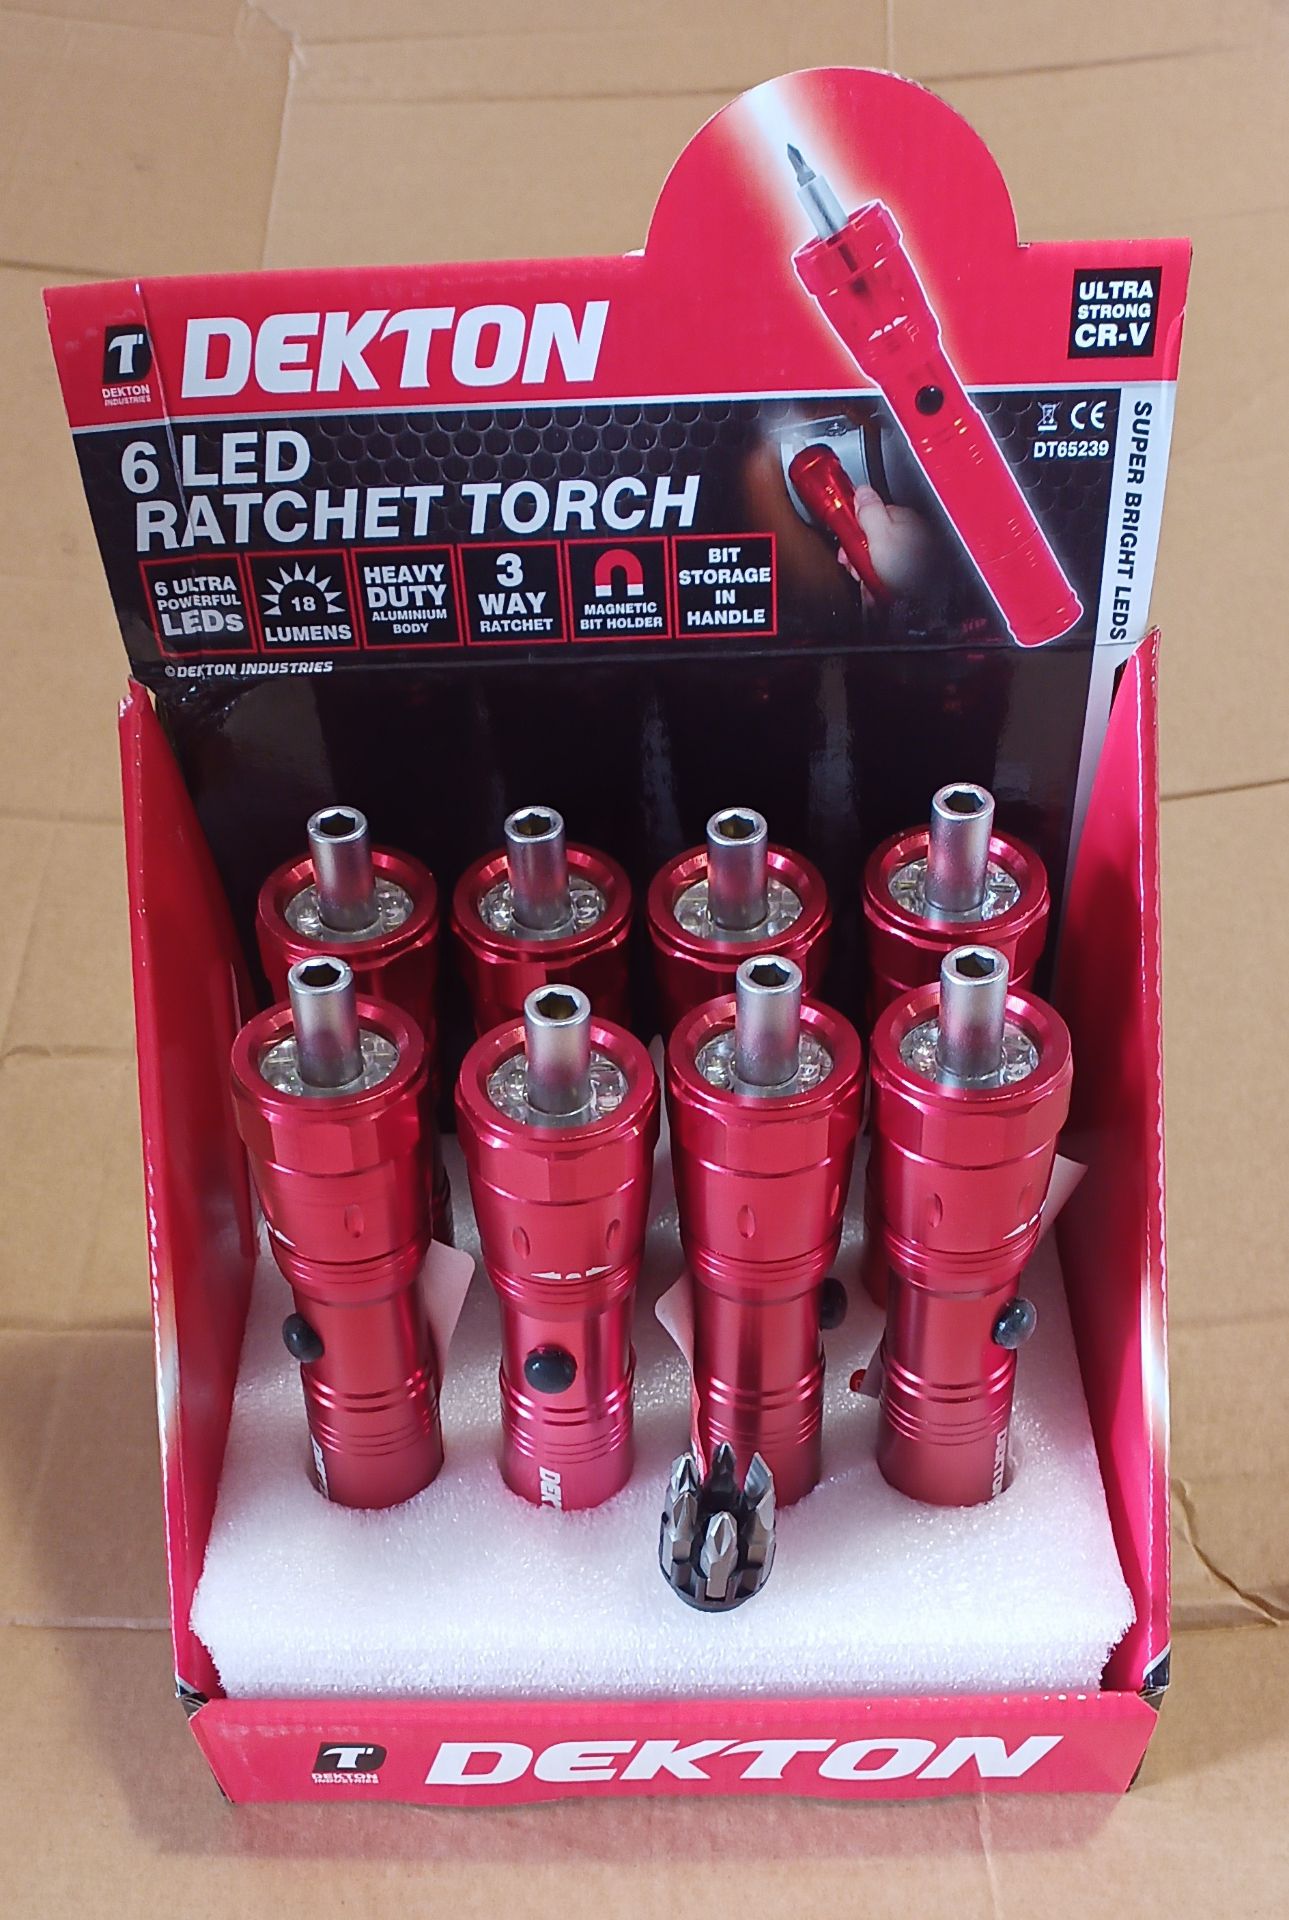 10 x Dekton 6 LED Ratchet Torch in CDU | Total RRP £80